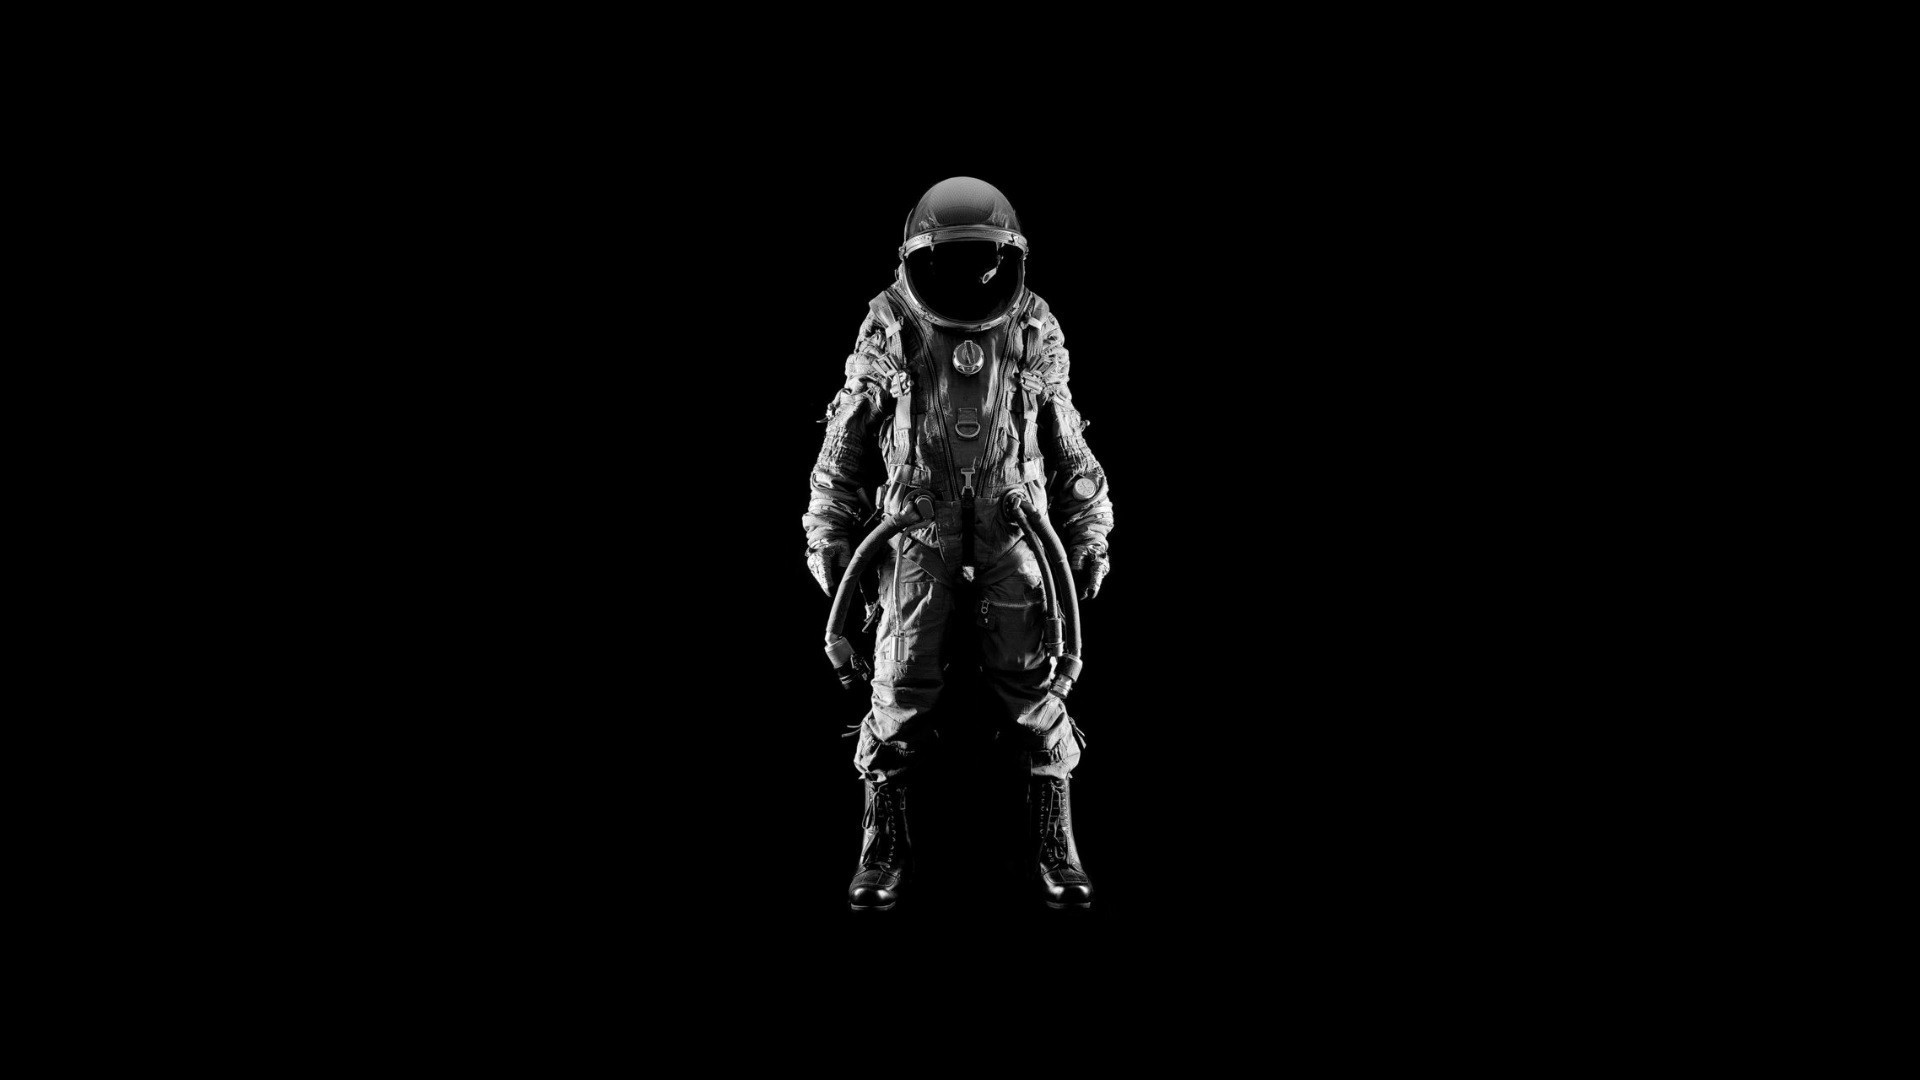 digital Art, Black Background, Minimalism, Astronaut, Helmet, Spacesuit, Monochrome, Boots Wallpaper